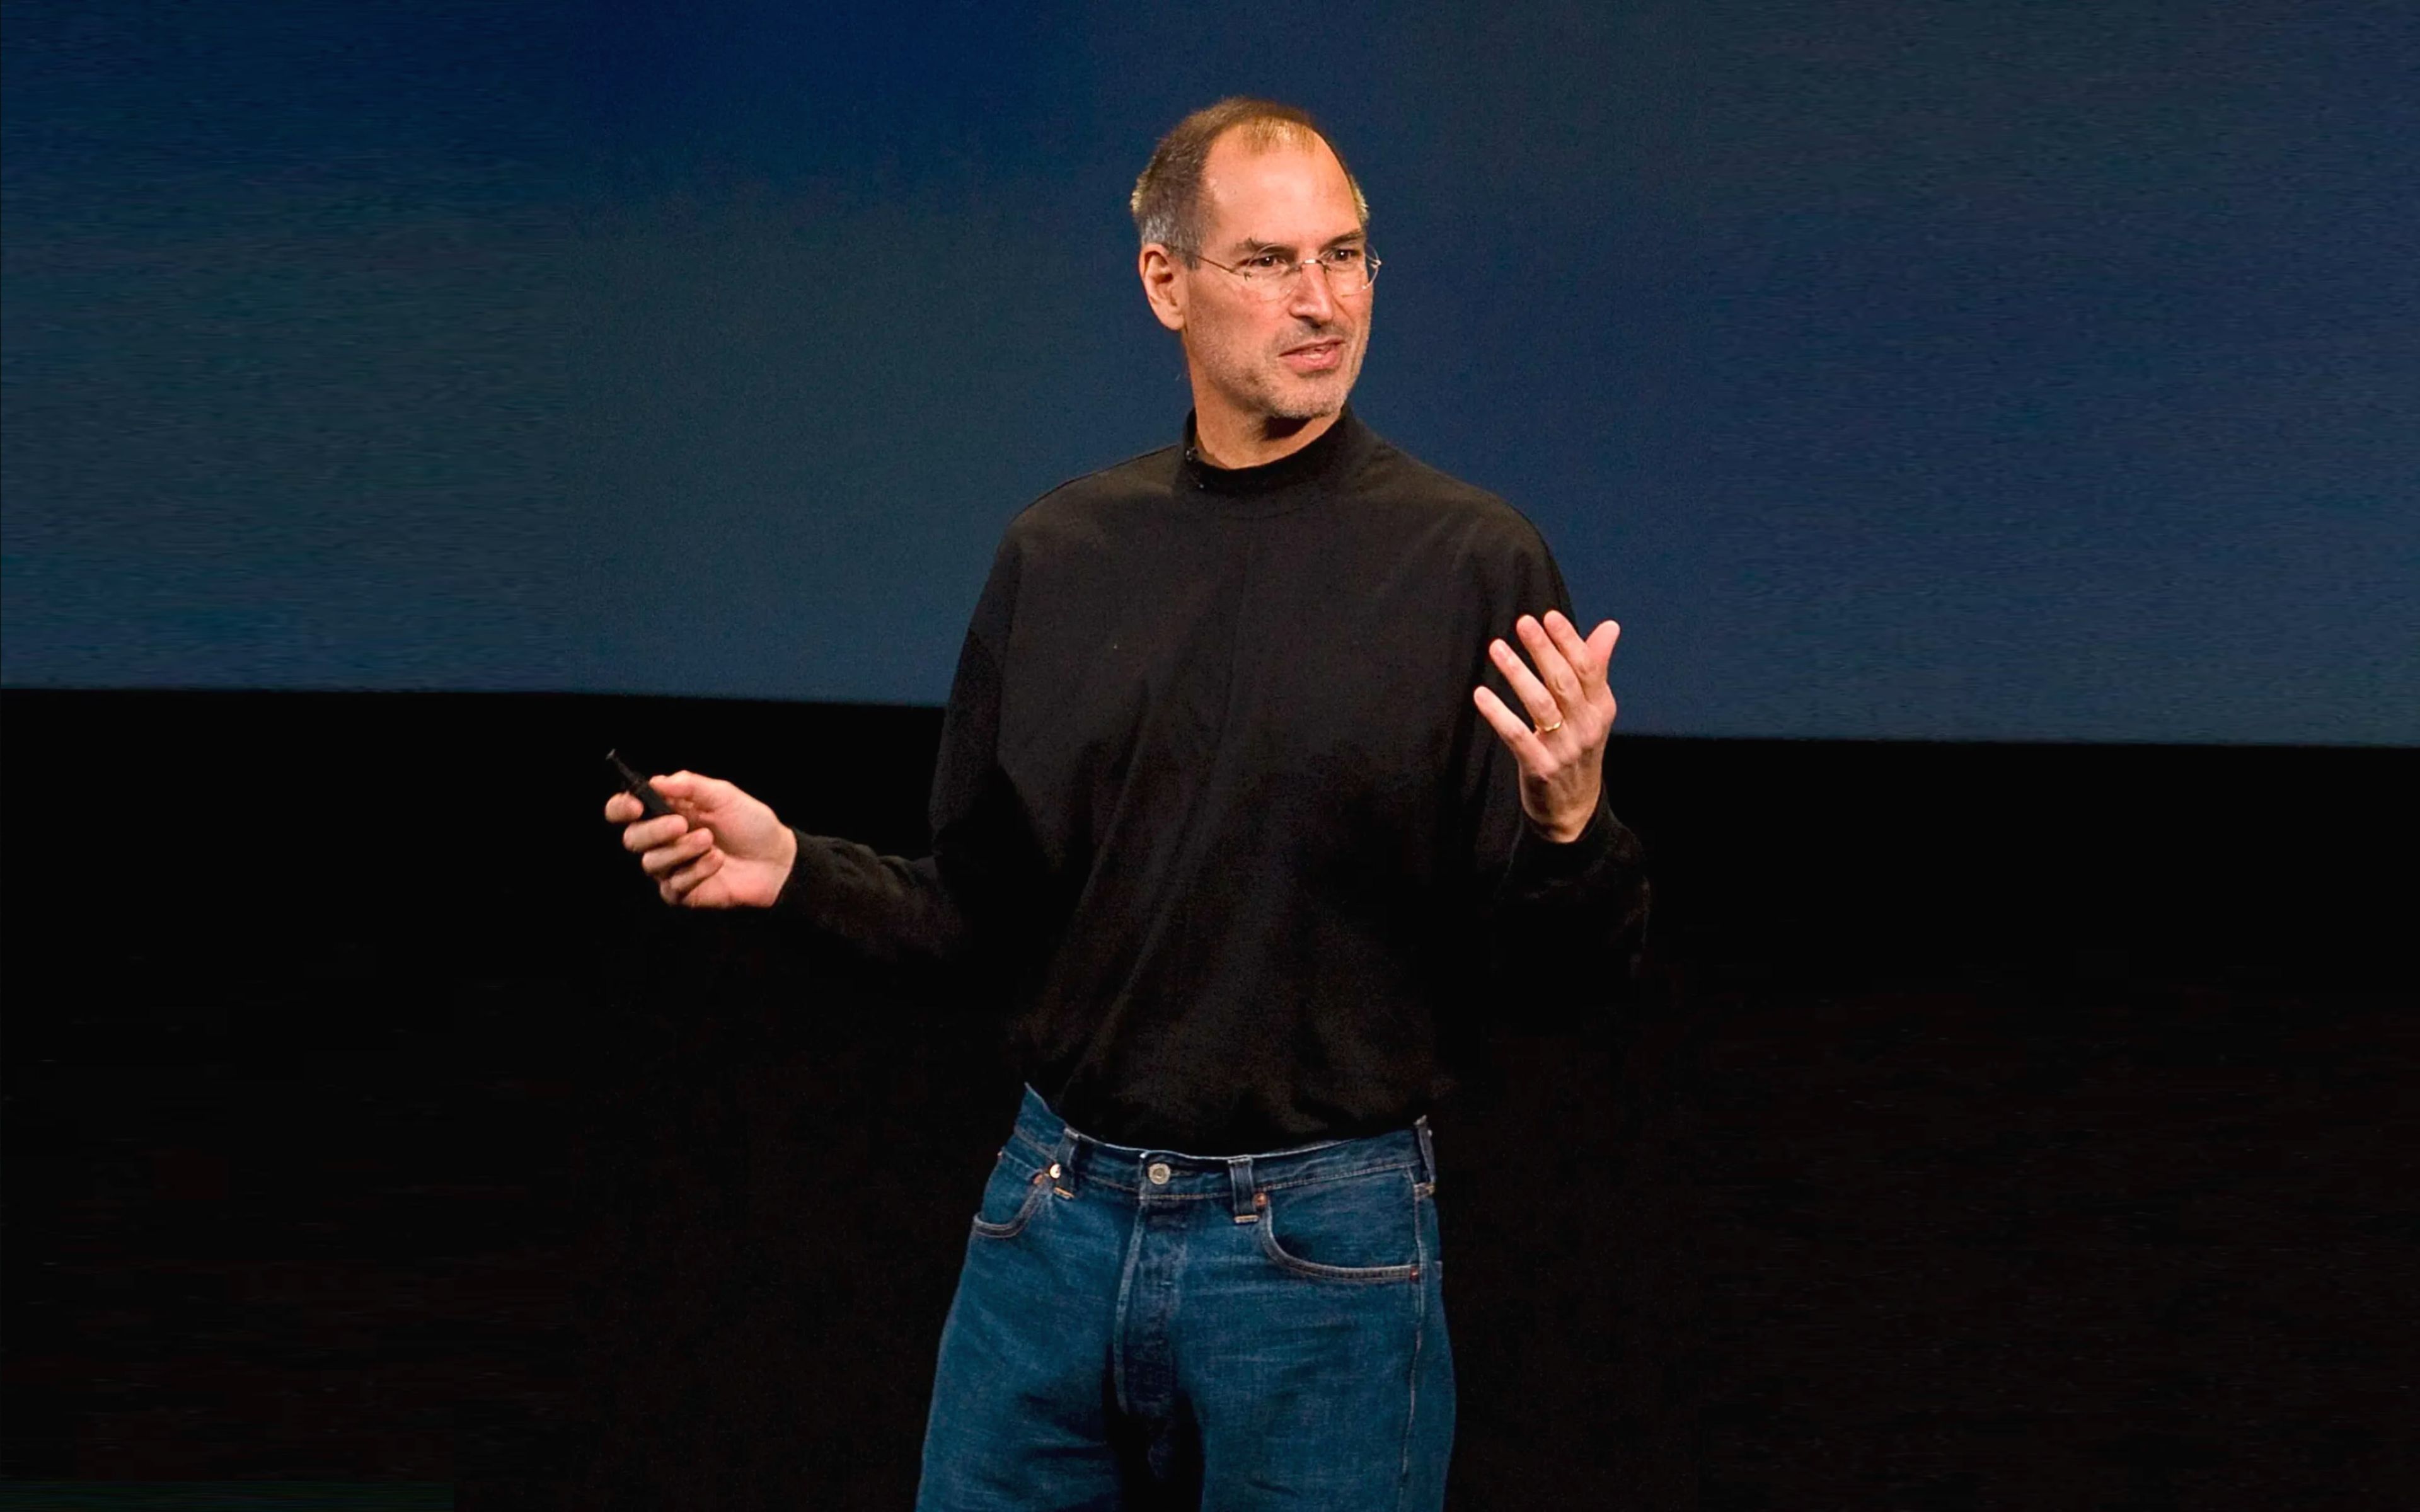 La vestimenta de Steve Jobs